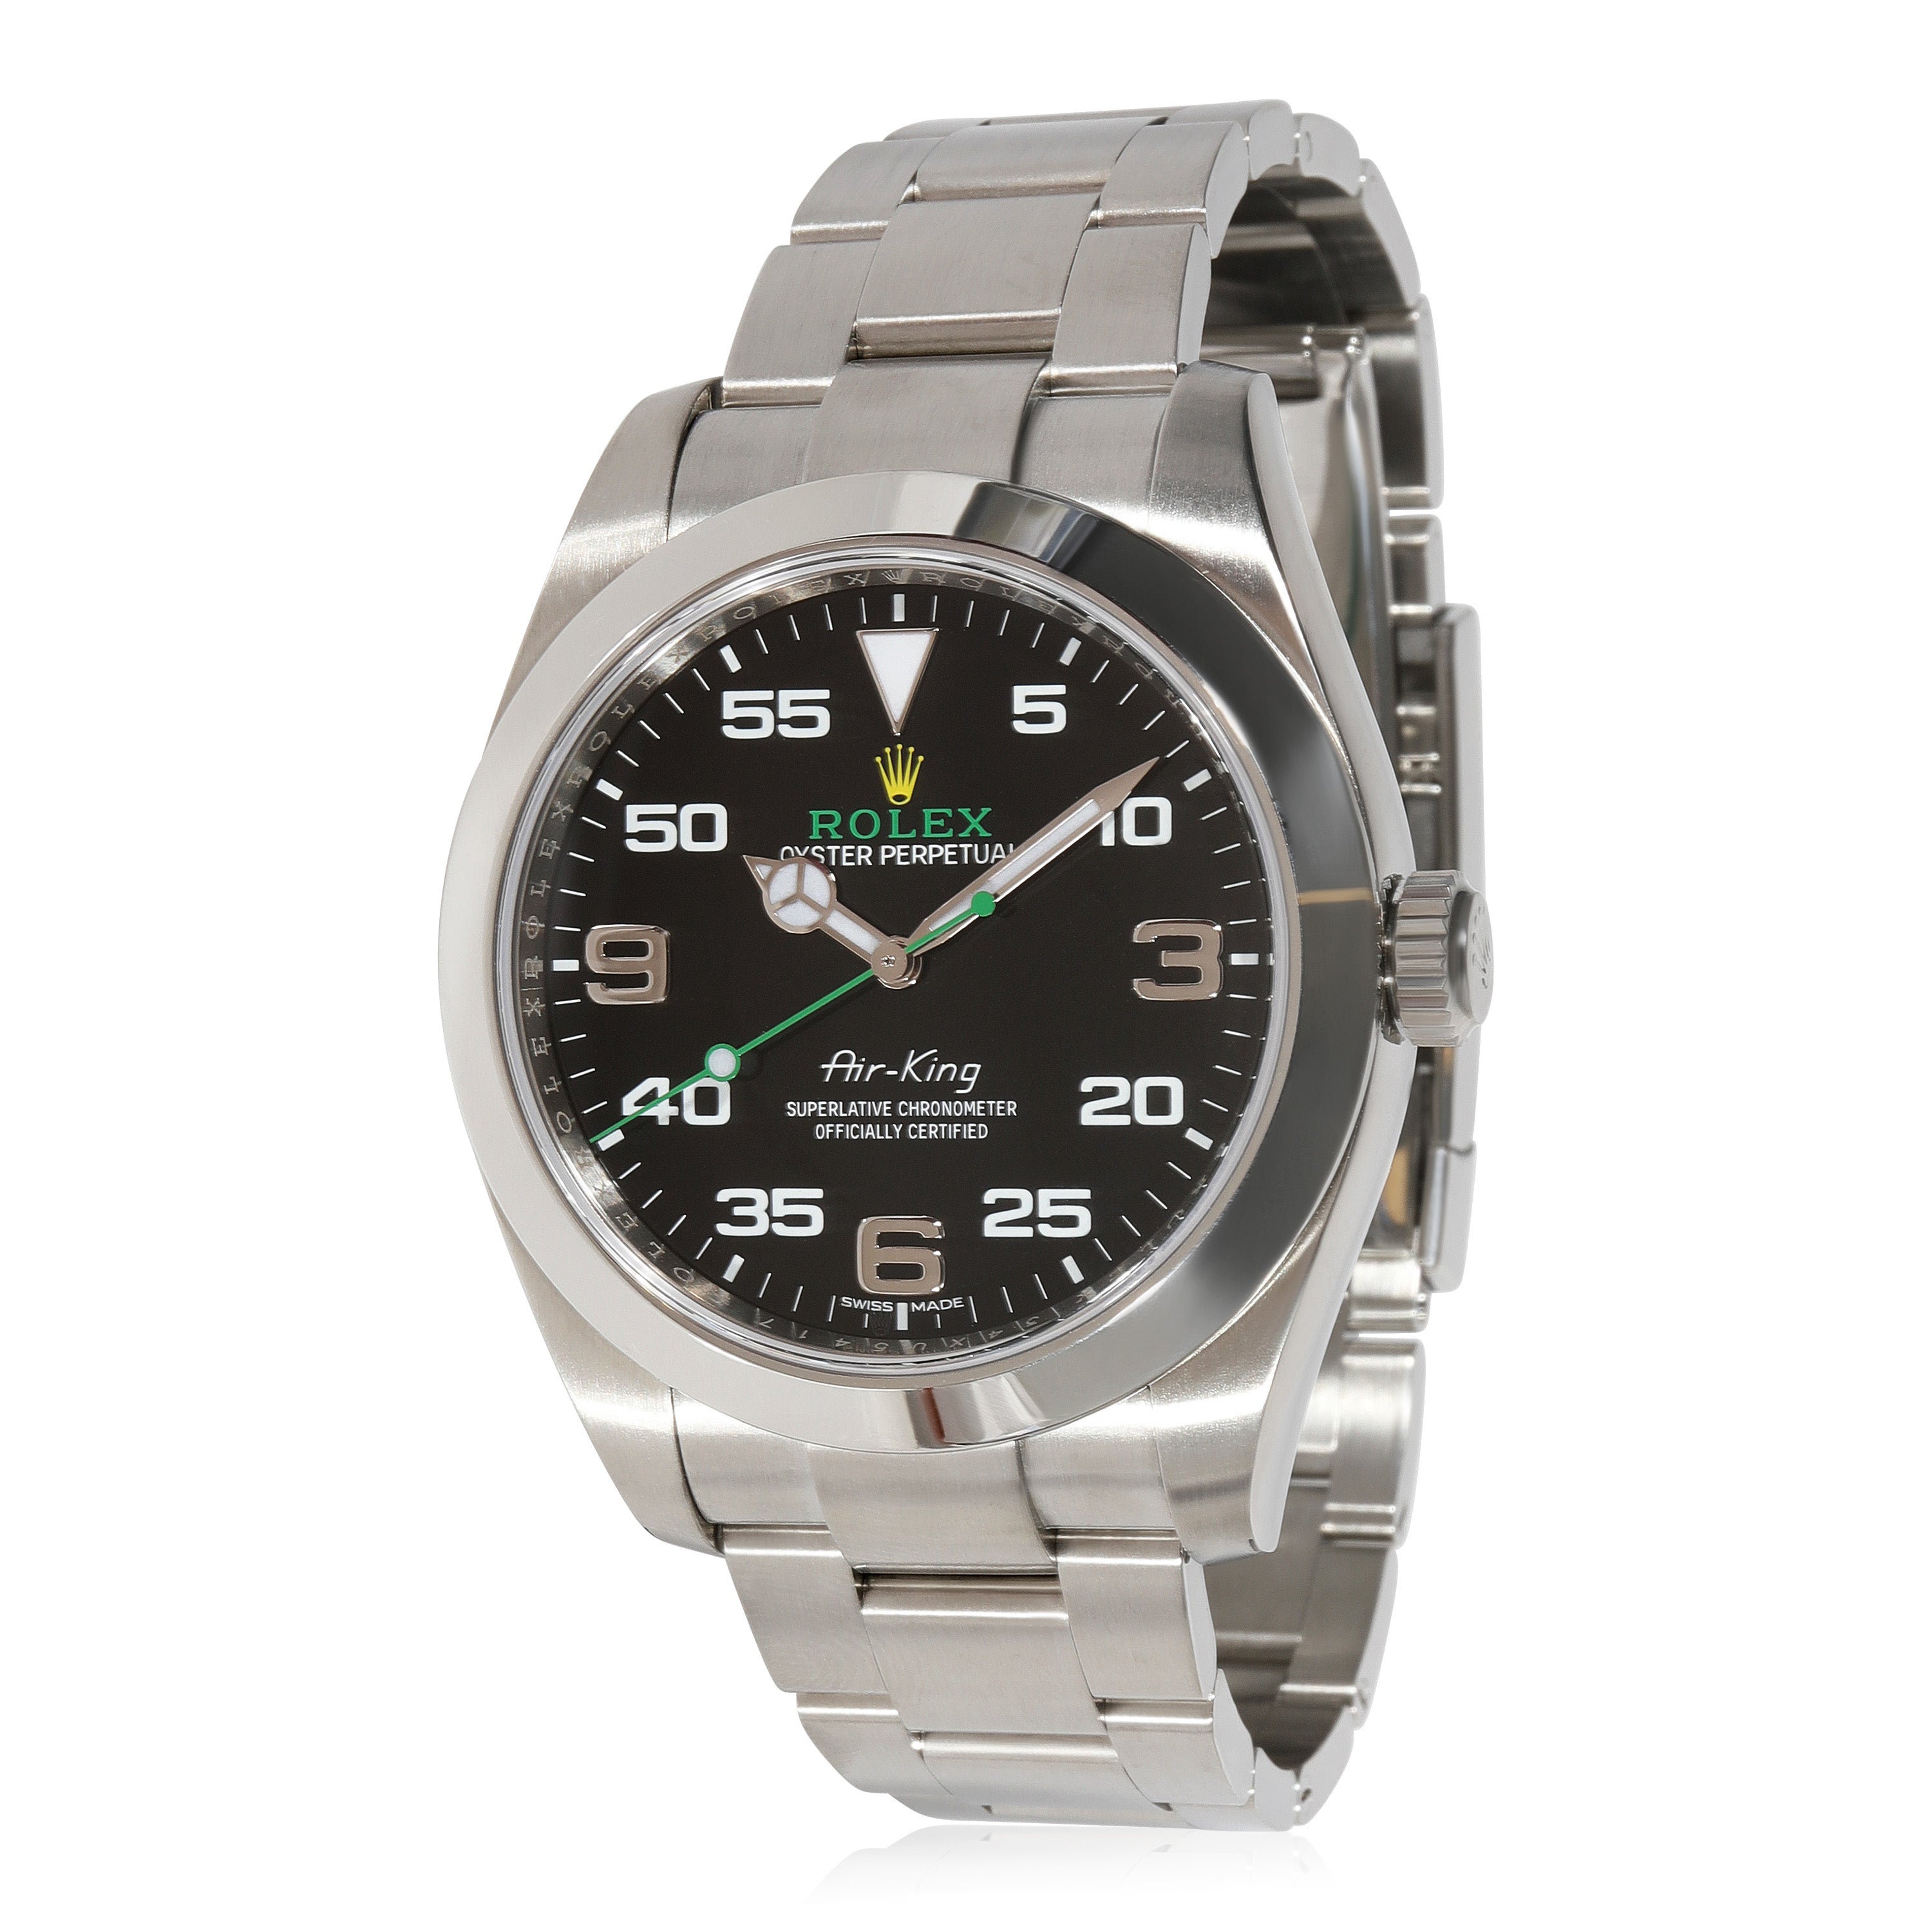 Rolex Air-King 116900 Men's Watch in Stainless Steel